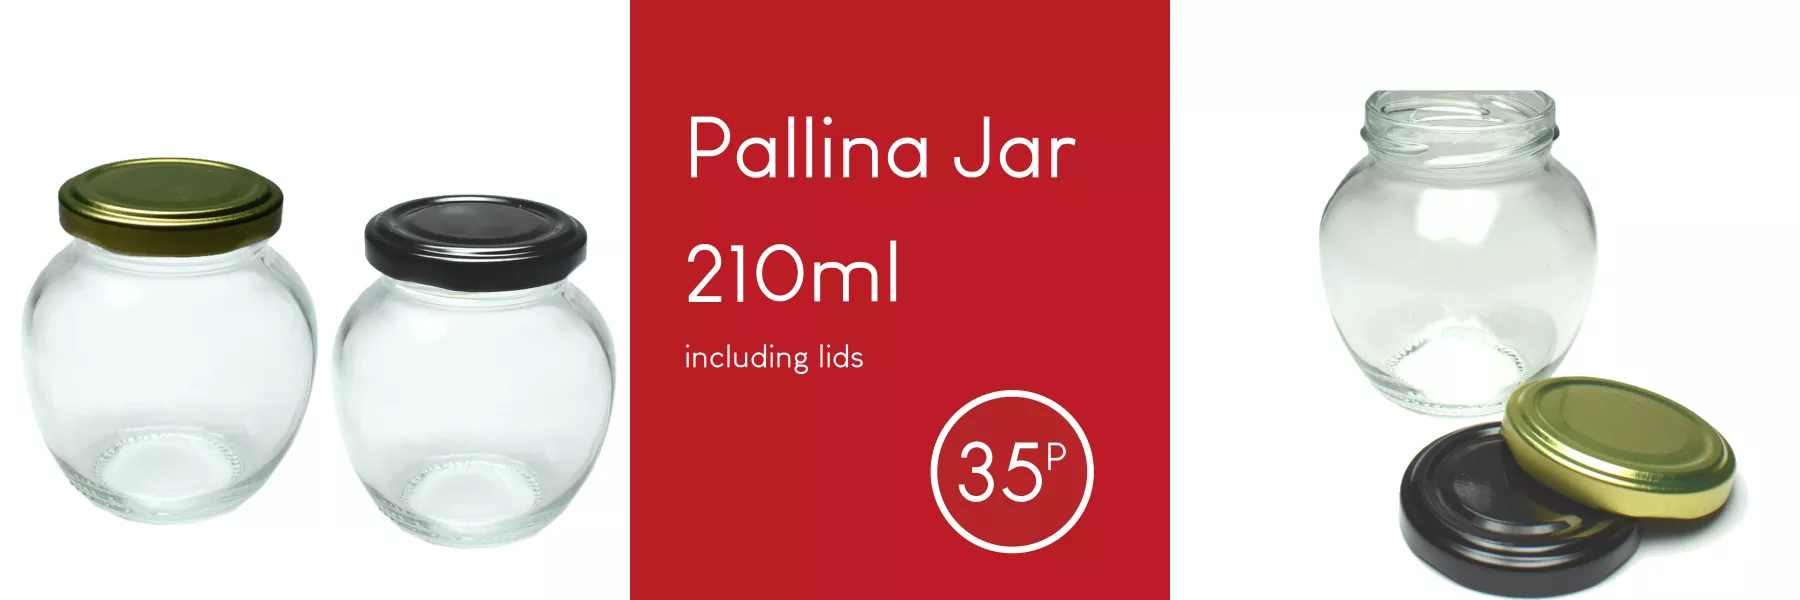 Love Jars Palinna Jar 210ml